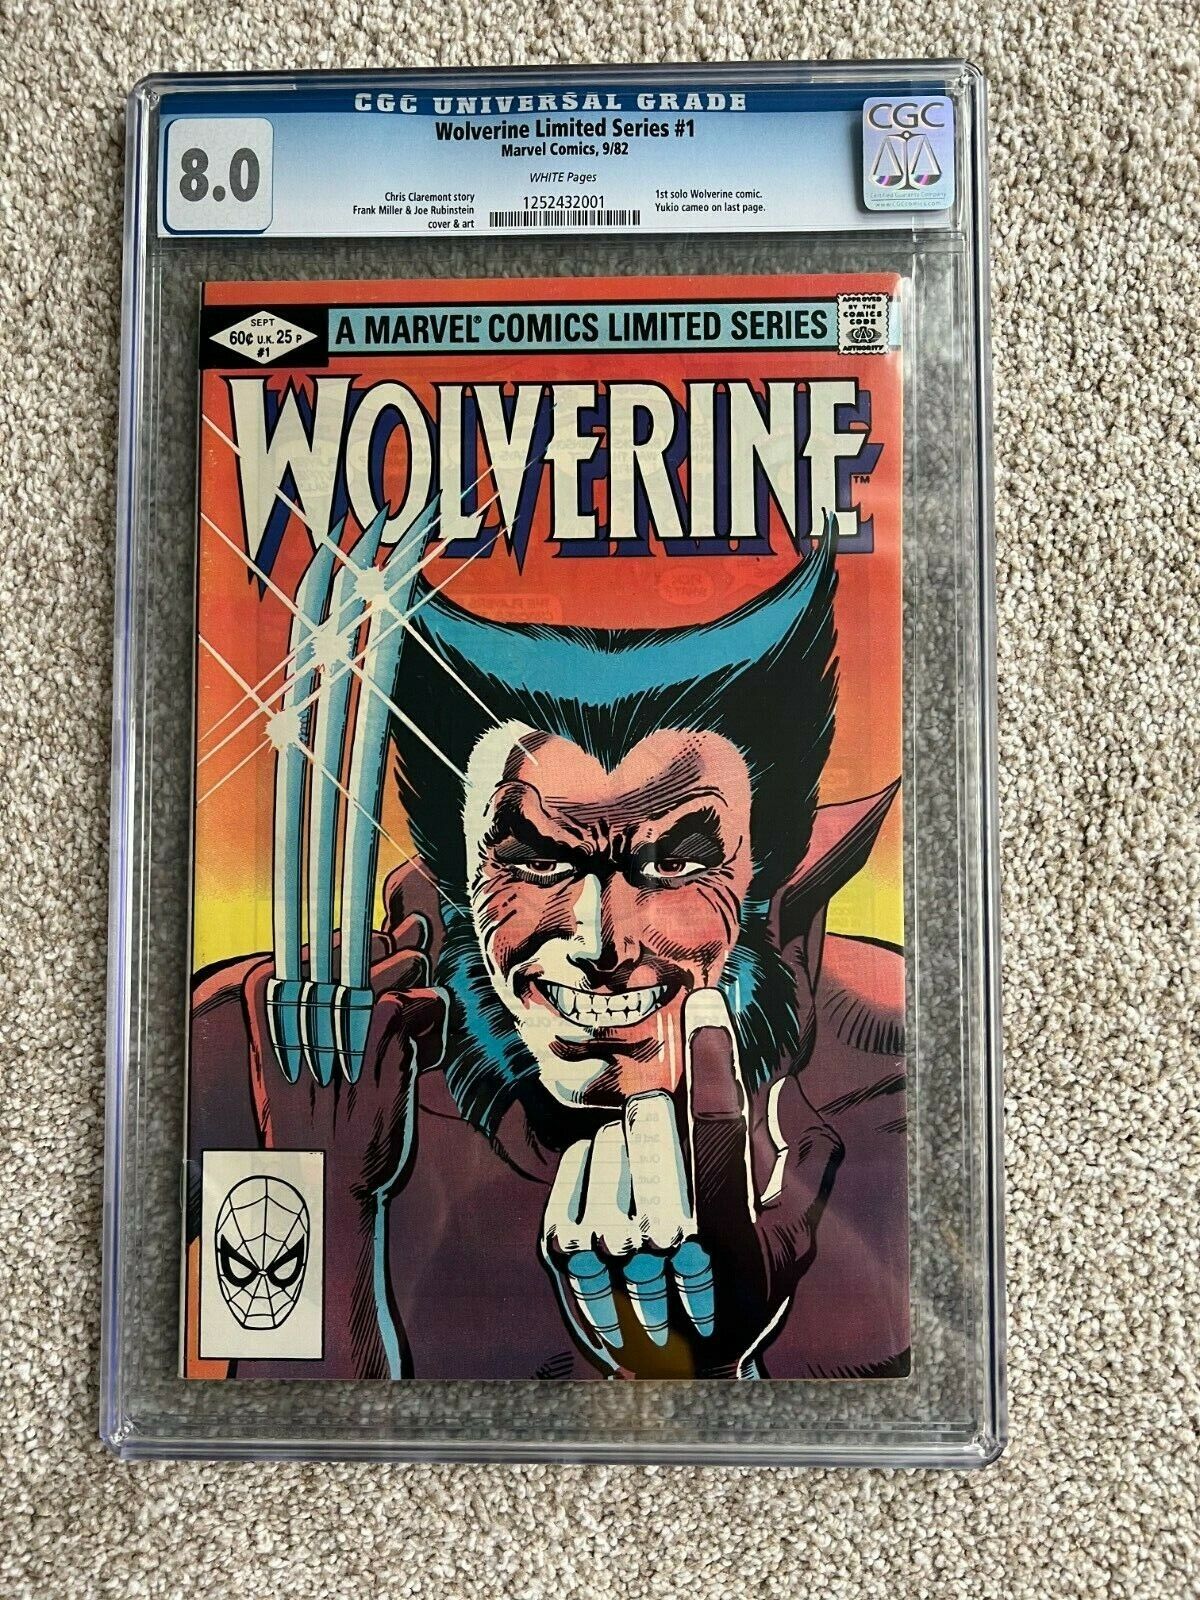 cgc graded marvel comic books. Wolverine #1